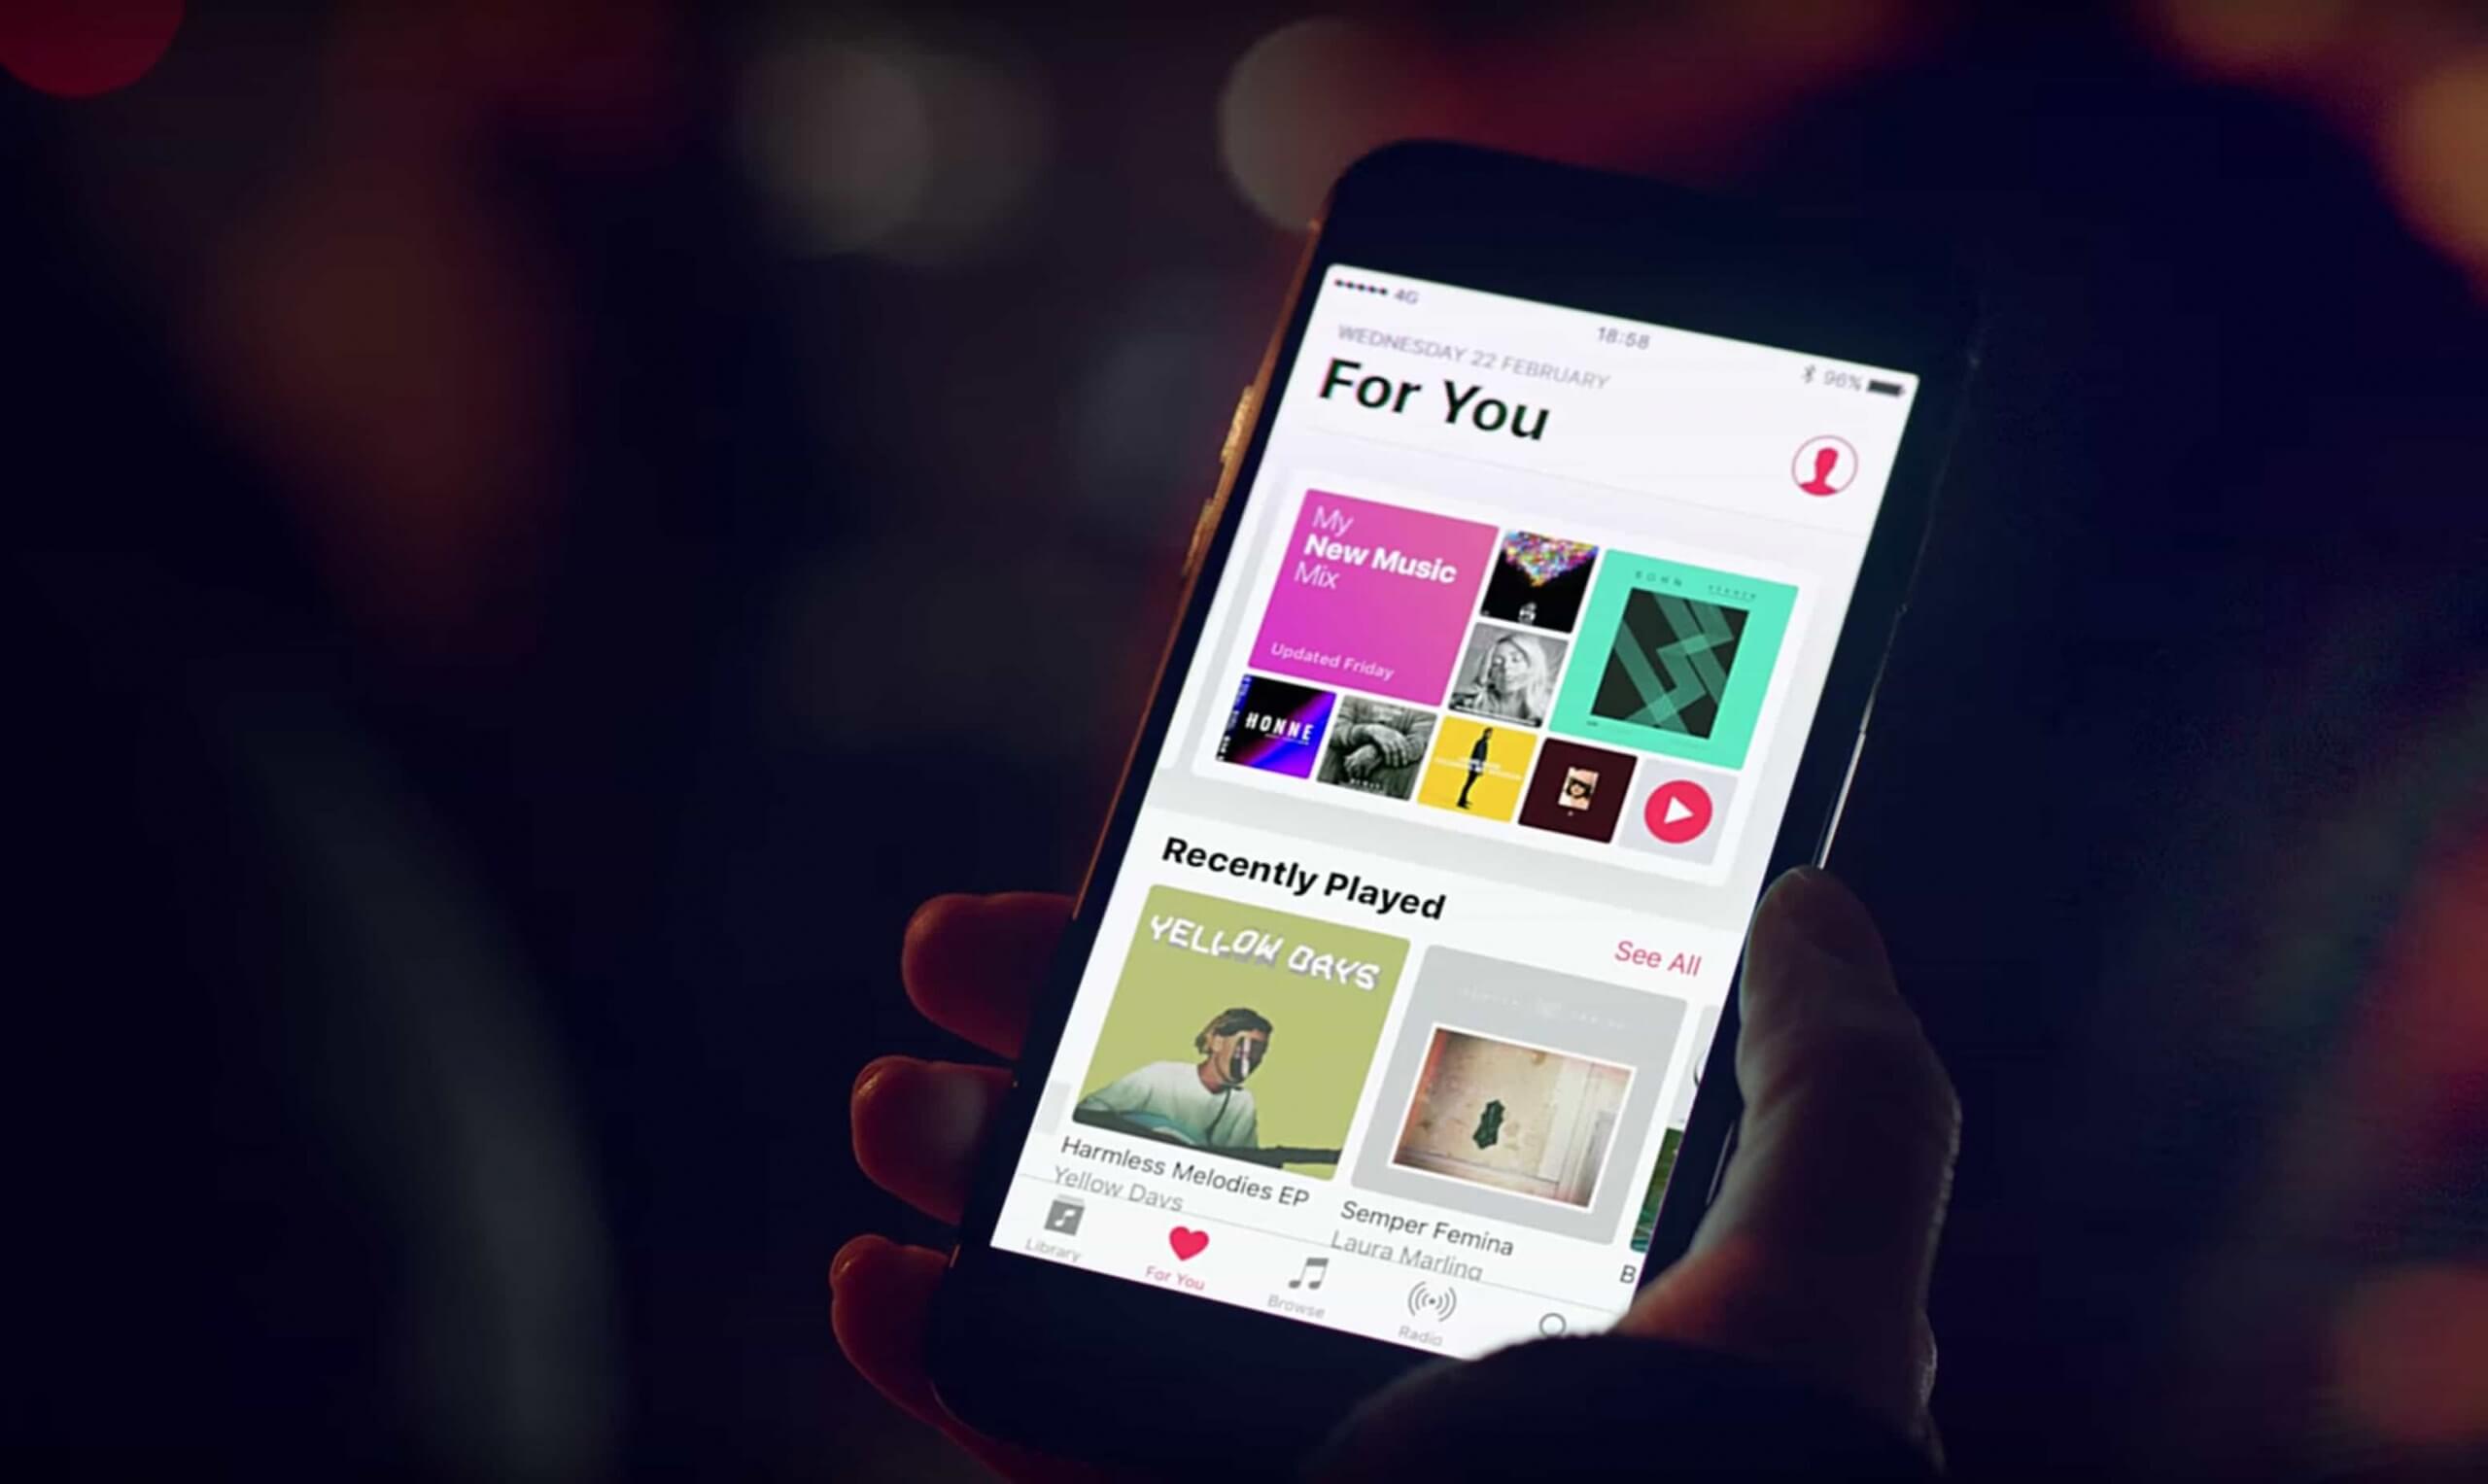 Apple has formed a partnership with lyrics database provider Genius